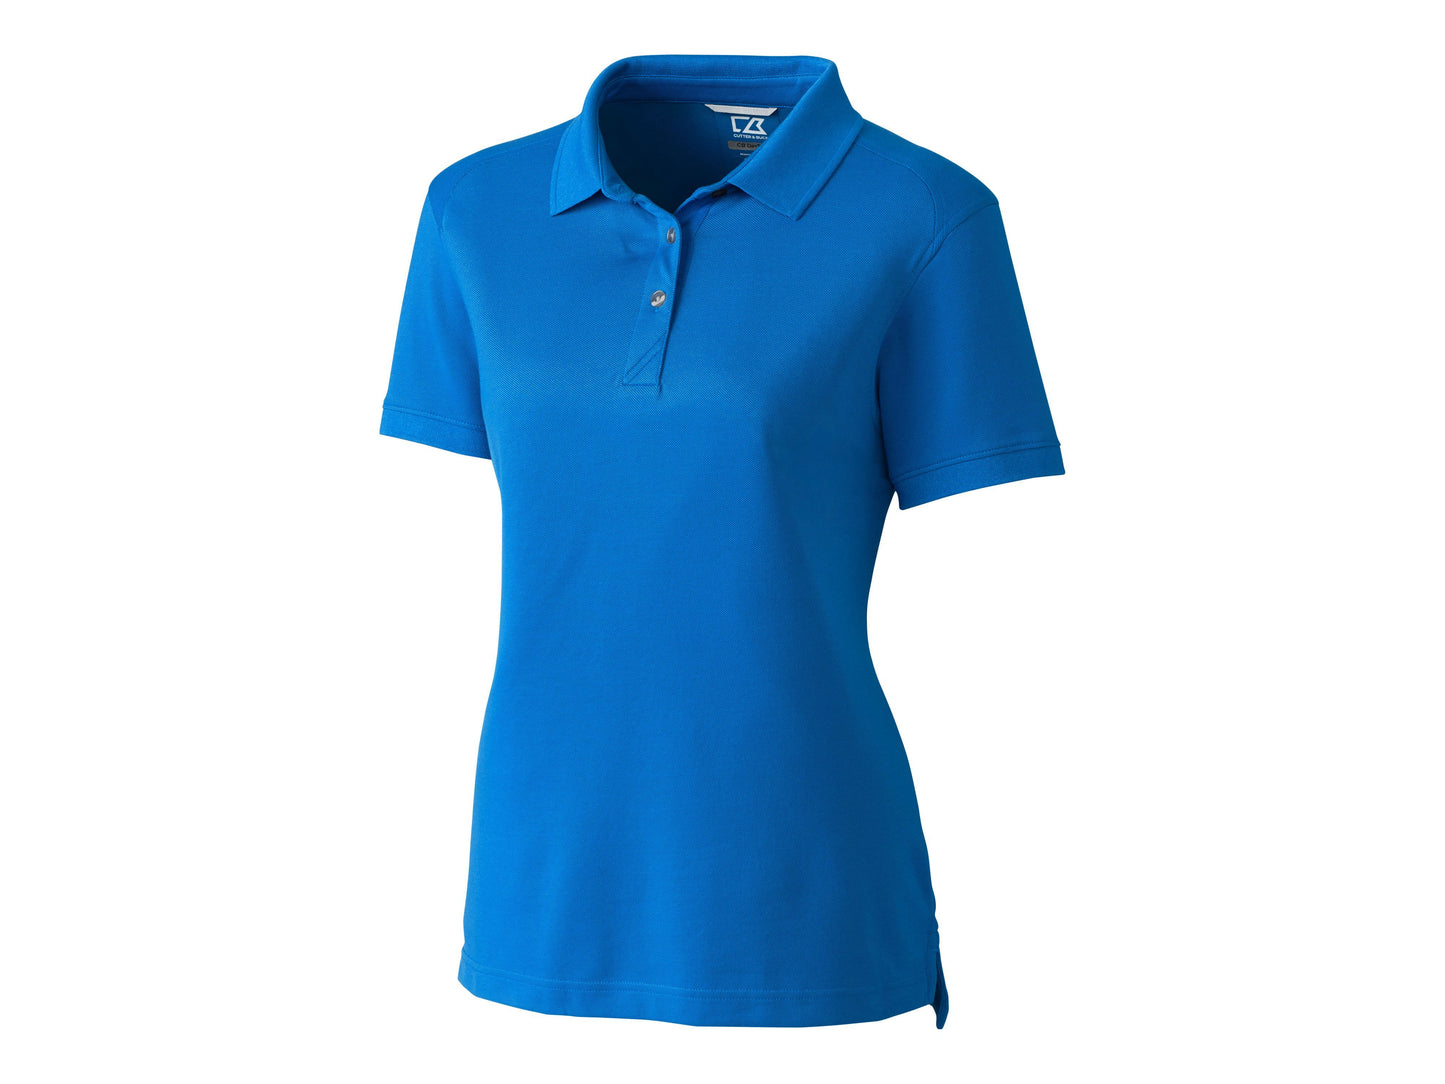 Cutter and Buck Shirts Advantage Polo (Women's Cut) - LCK08685 - Digital